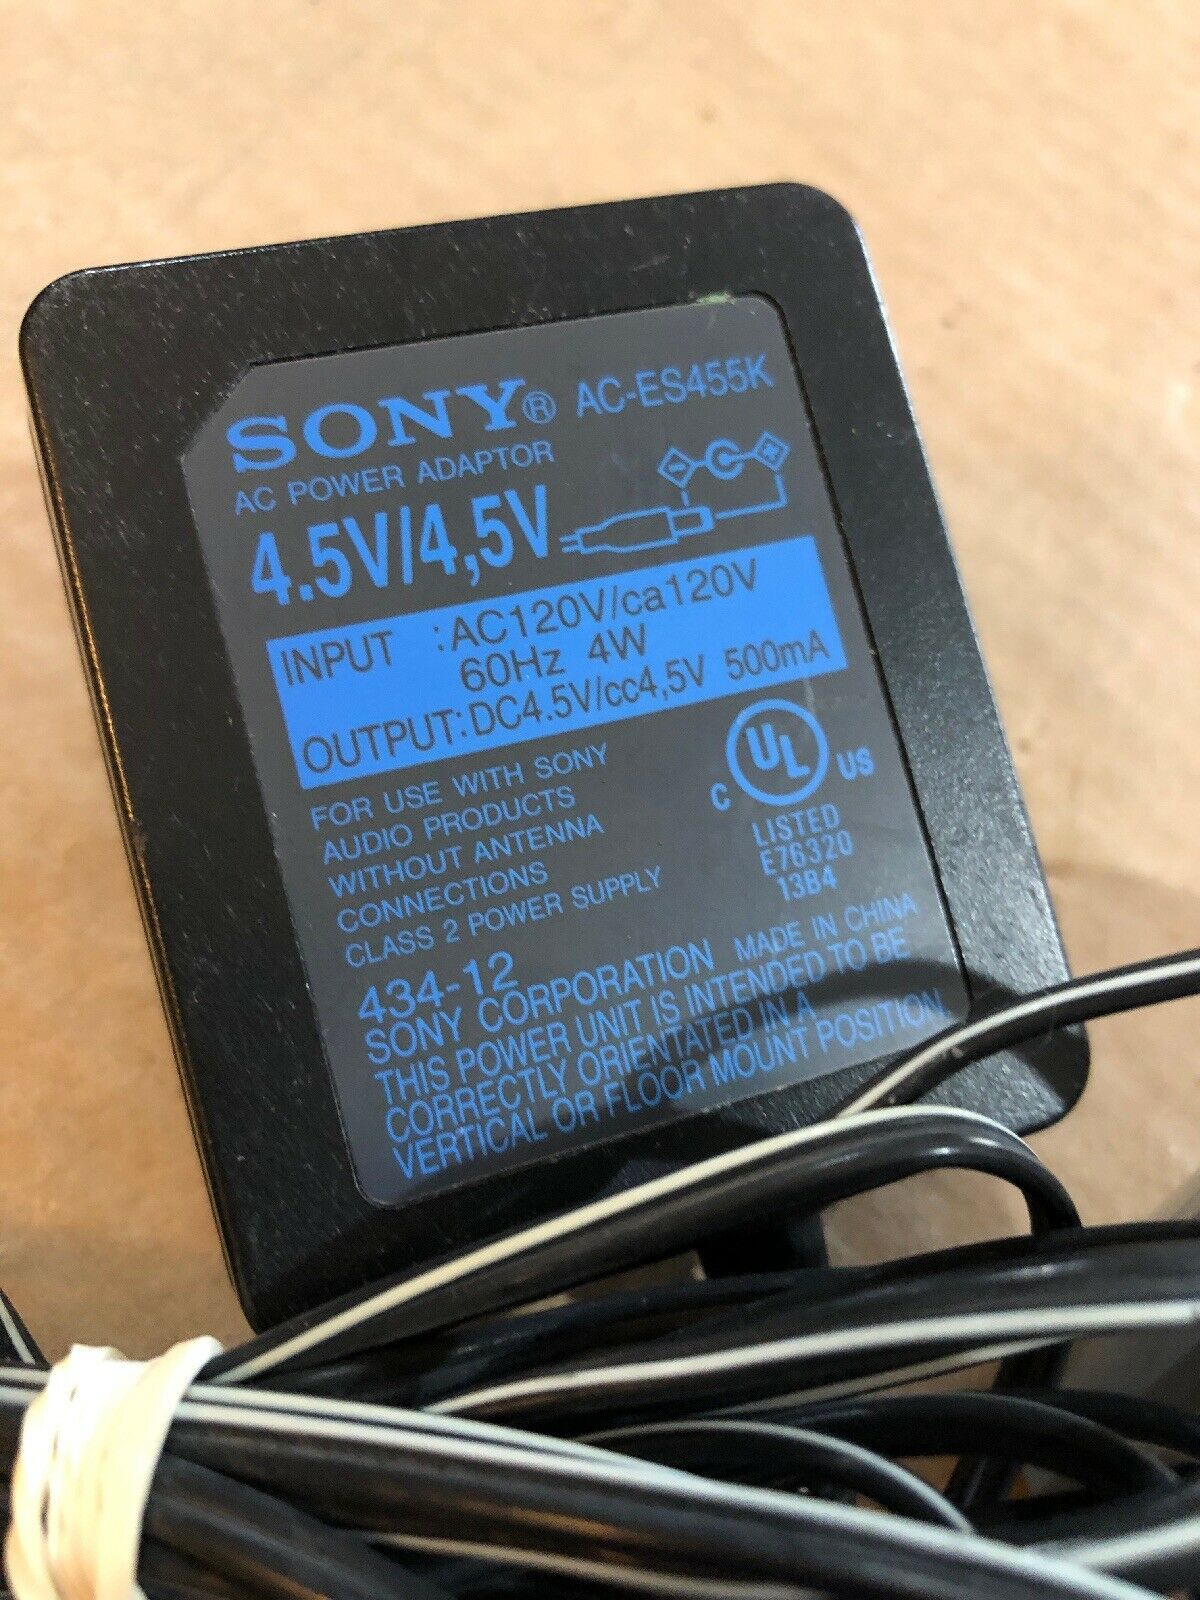 NEW 4.5V 500mA AC-ES455K ADAPTER for Sony NWA-UC70D Charging USB Cradle Sony Walkman NW-MS70D